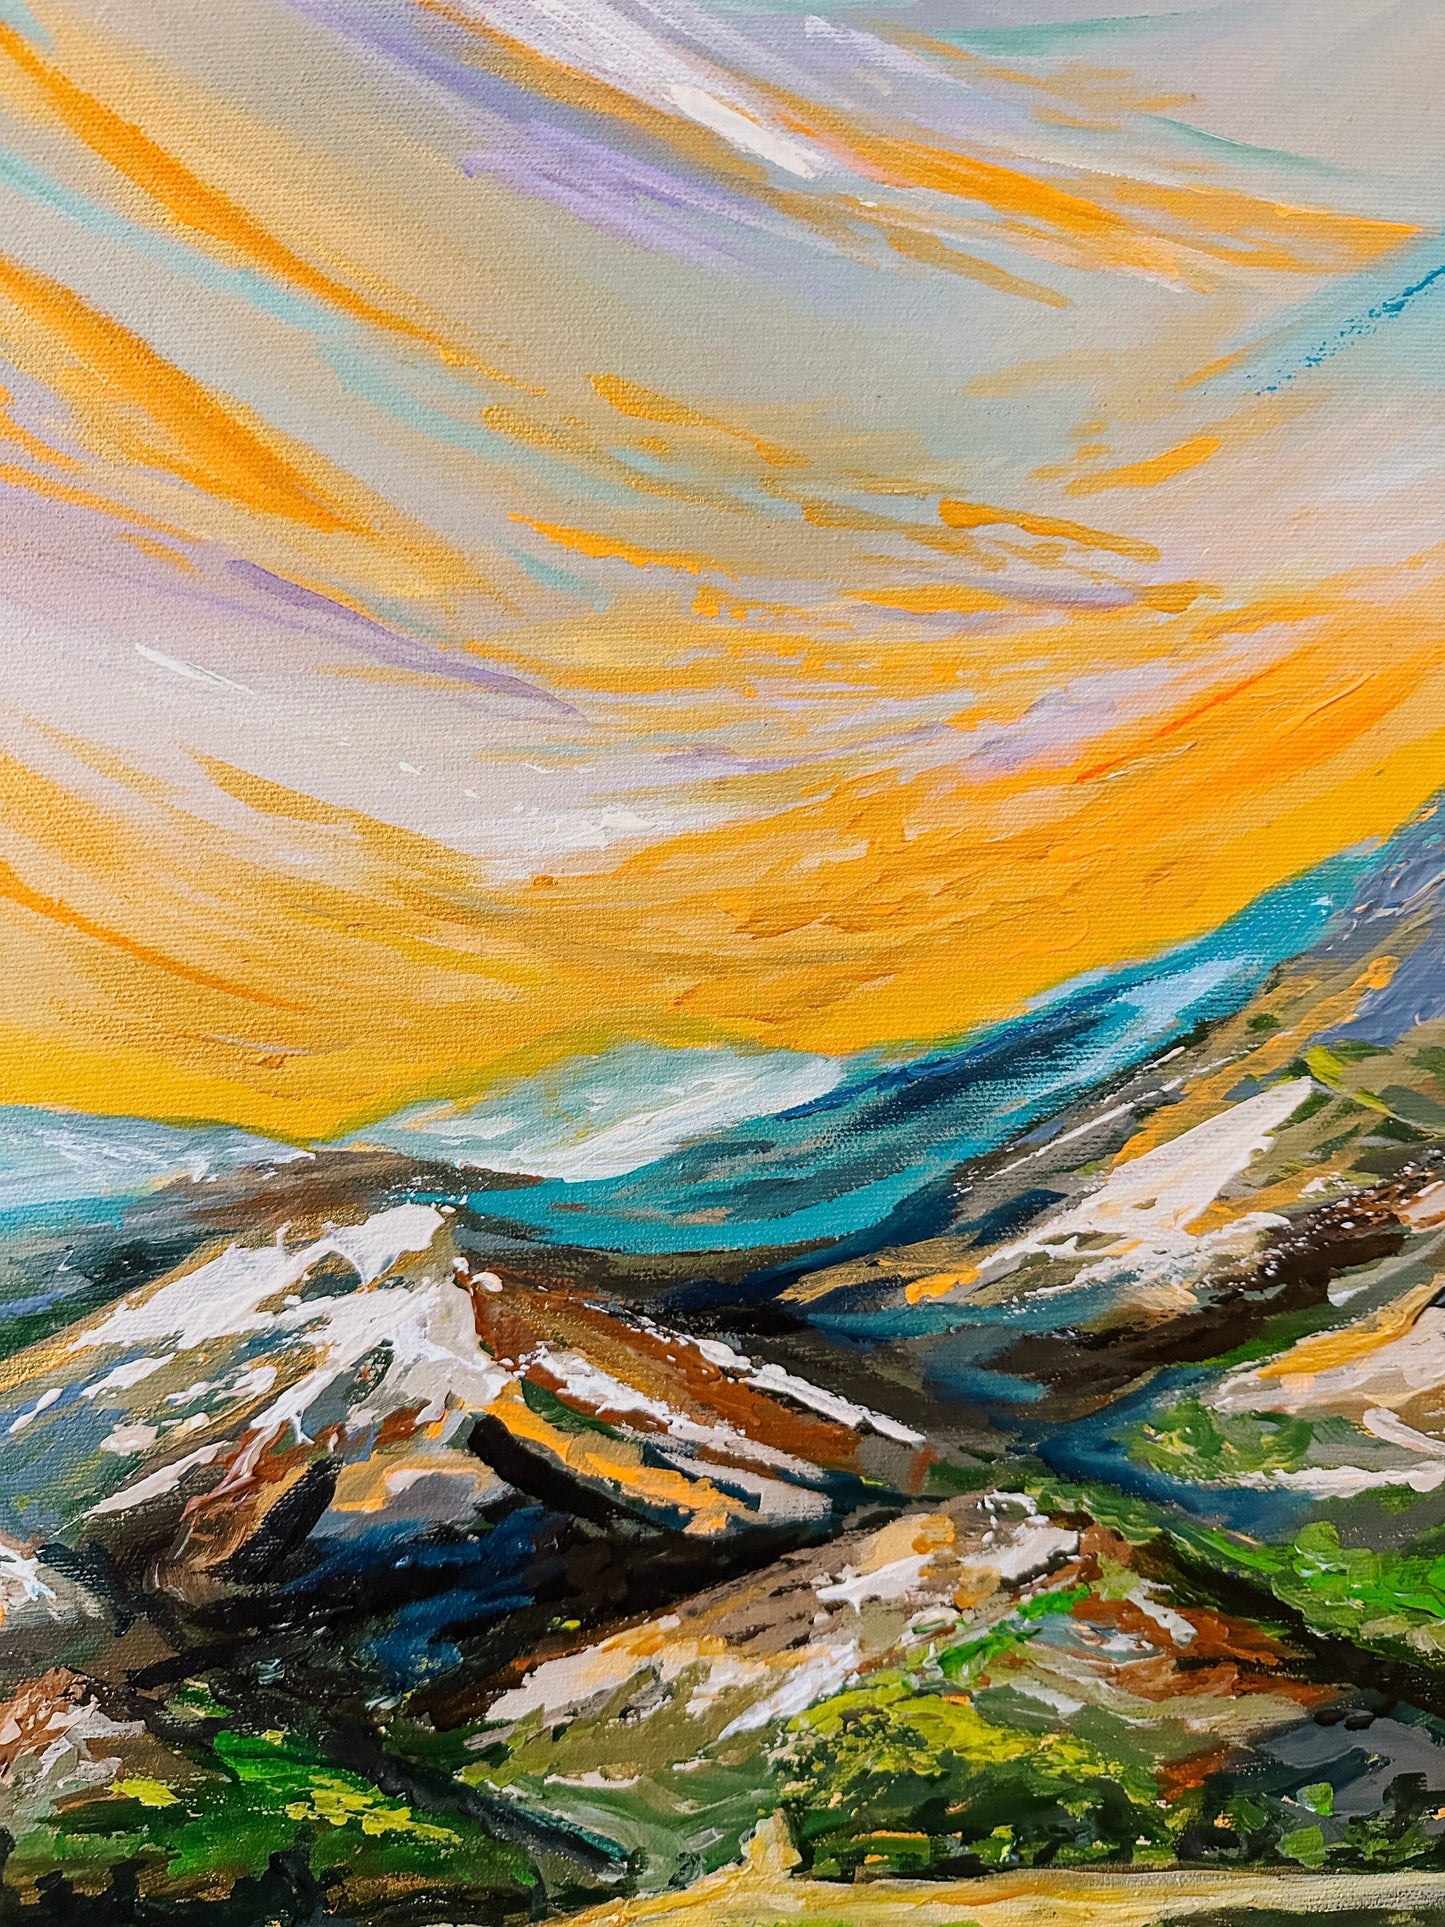 Mountains & Valleys - 5 Panel Travel Series' - Landscape Print